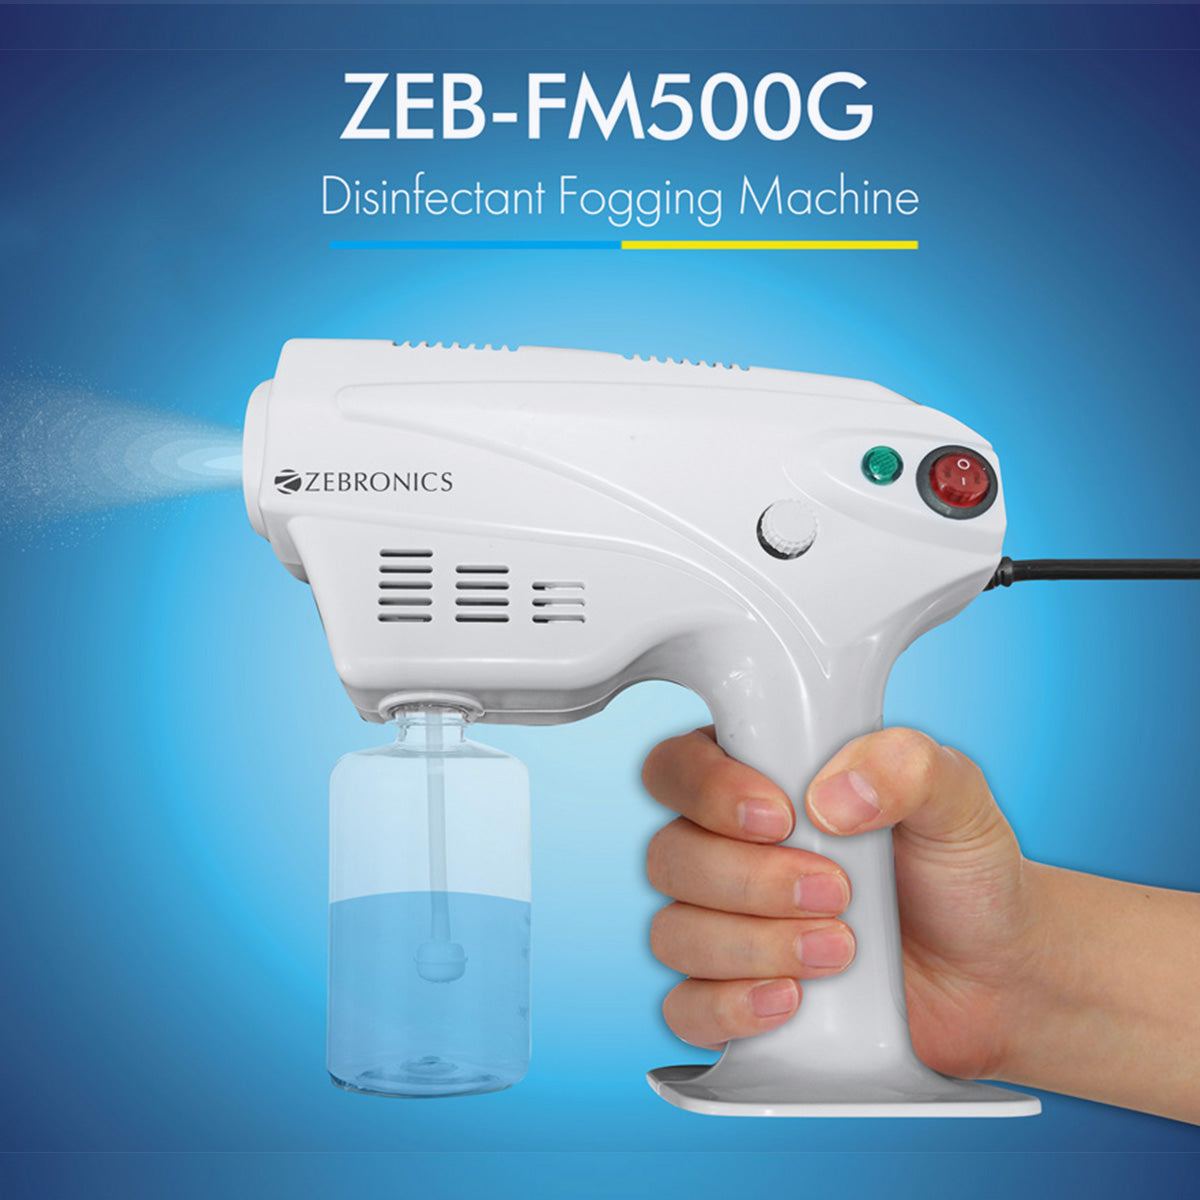 ZEB-FM500G - Disinfectant Fogging Machine - Zebronics